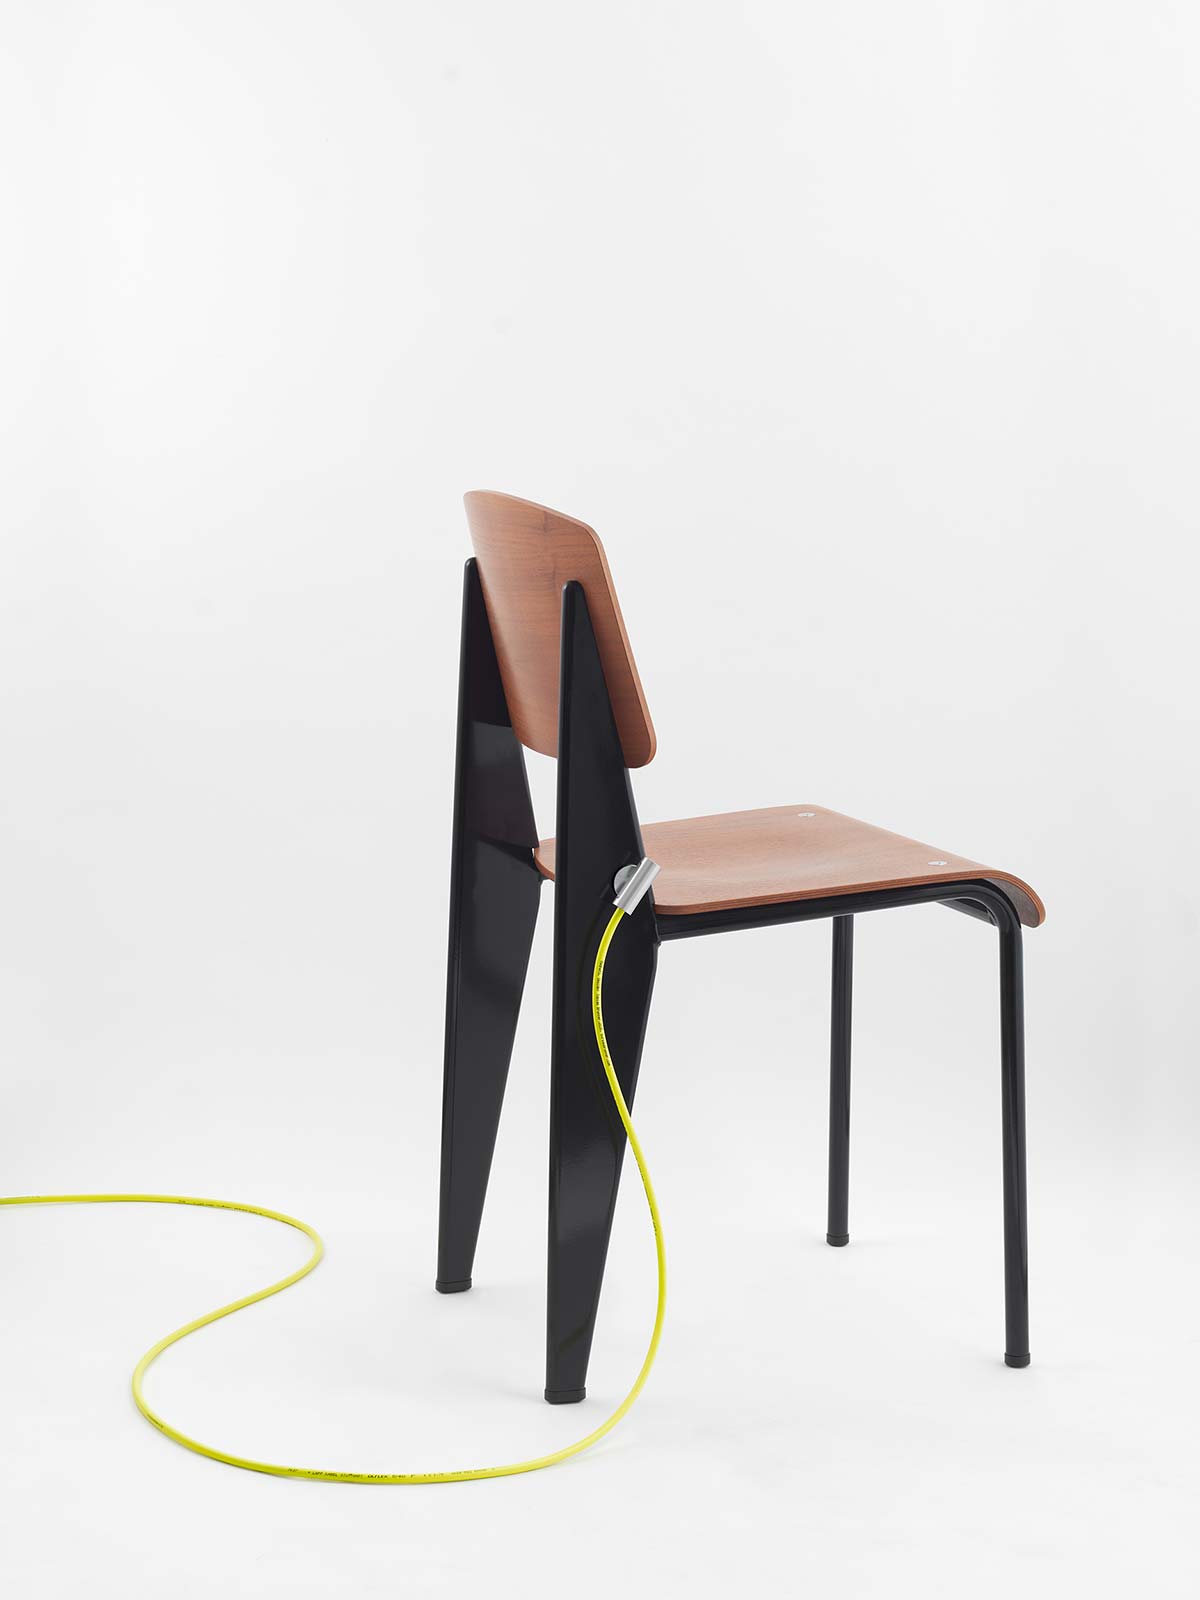 Сутенер, My Chair by Vitra, дизайн Tobias Brunner - Фото © Floriana Moser